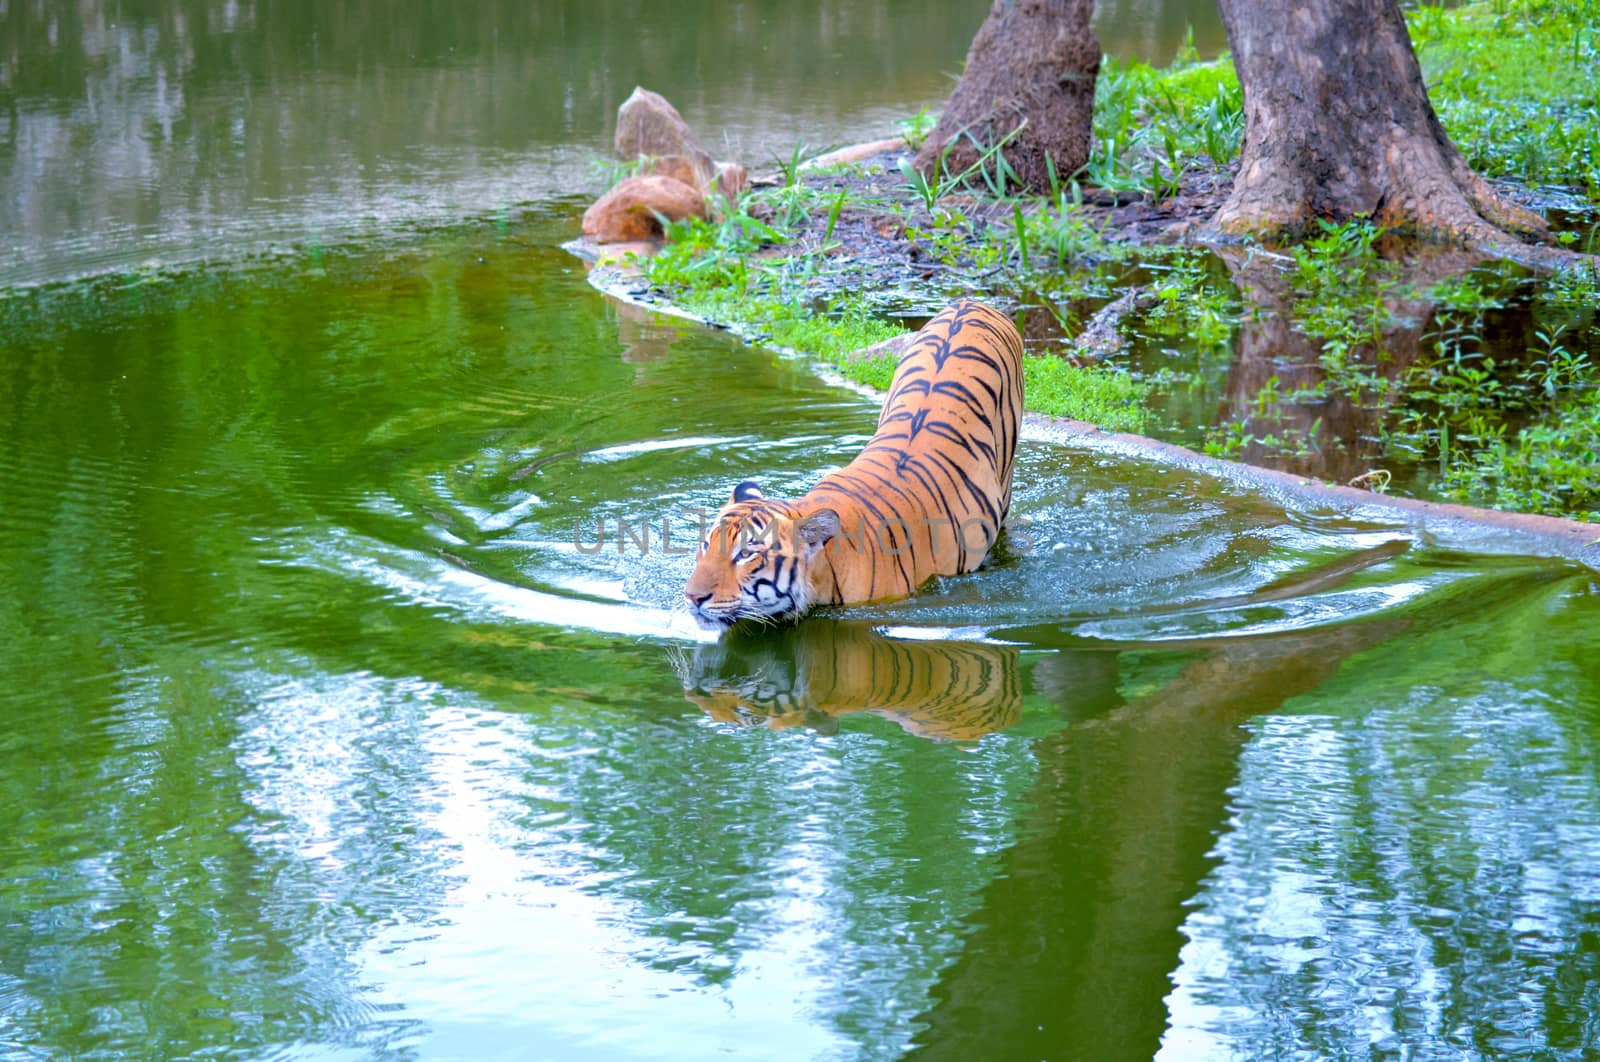 Tiger in water by rkbalaji